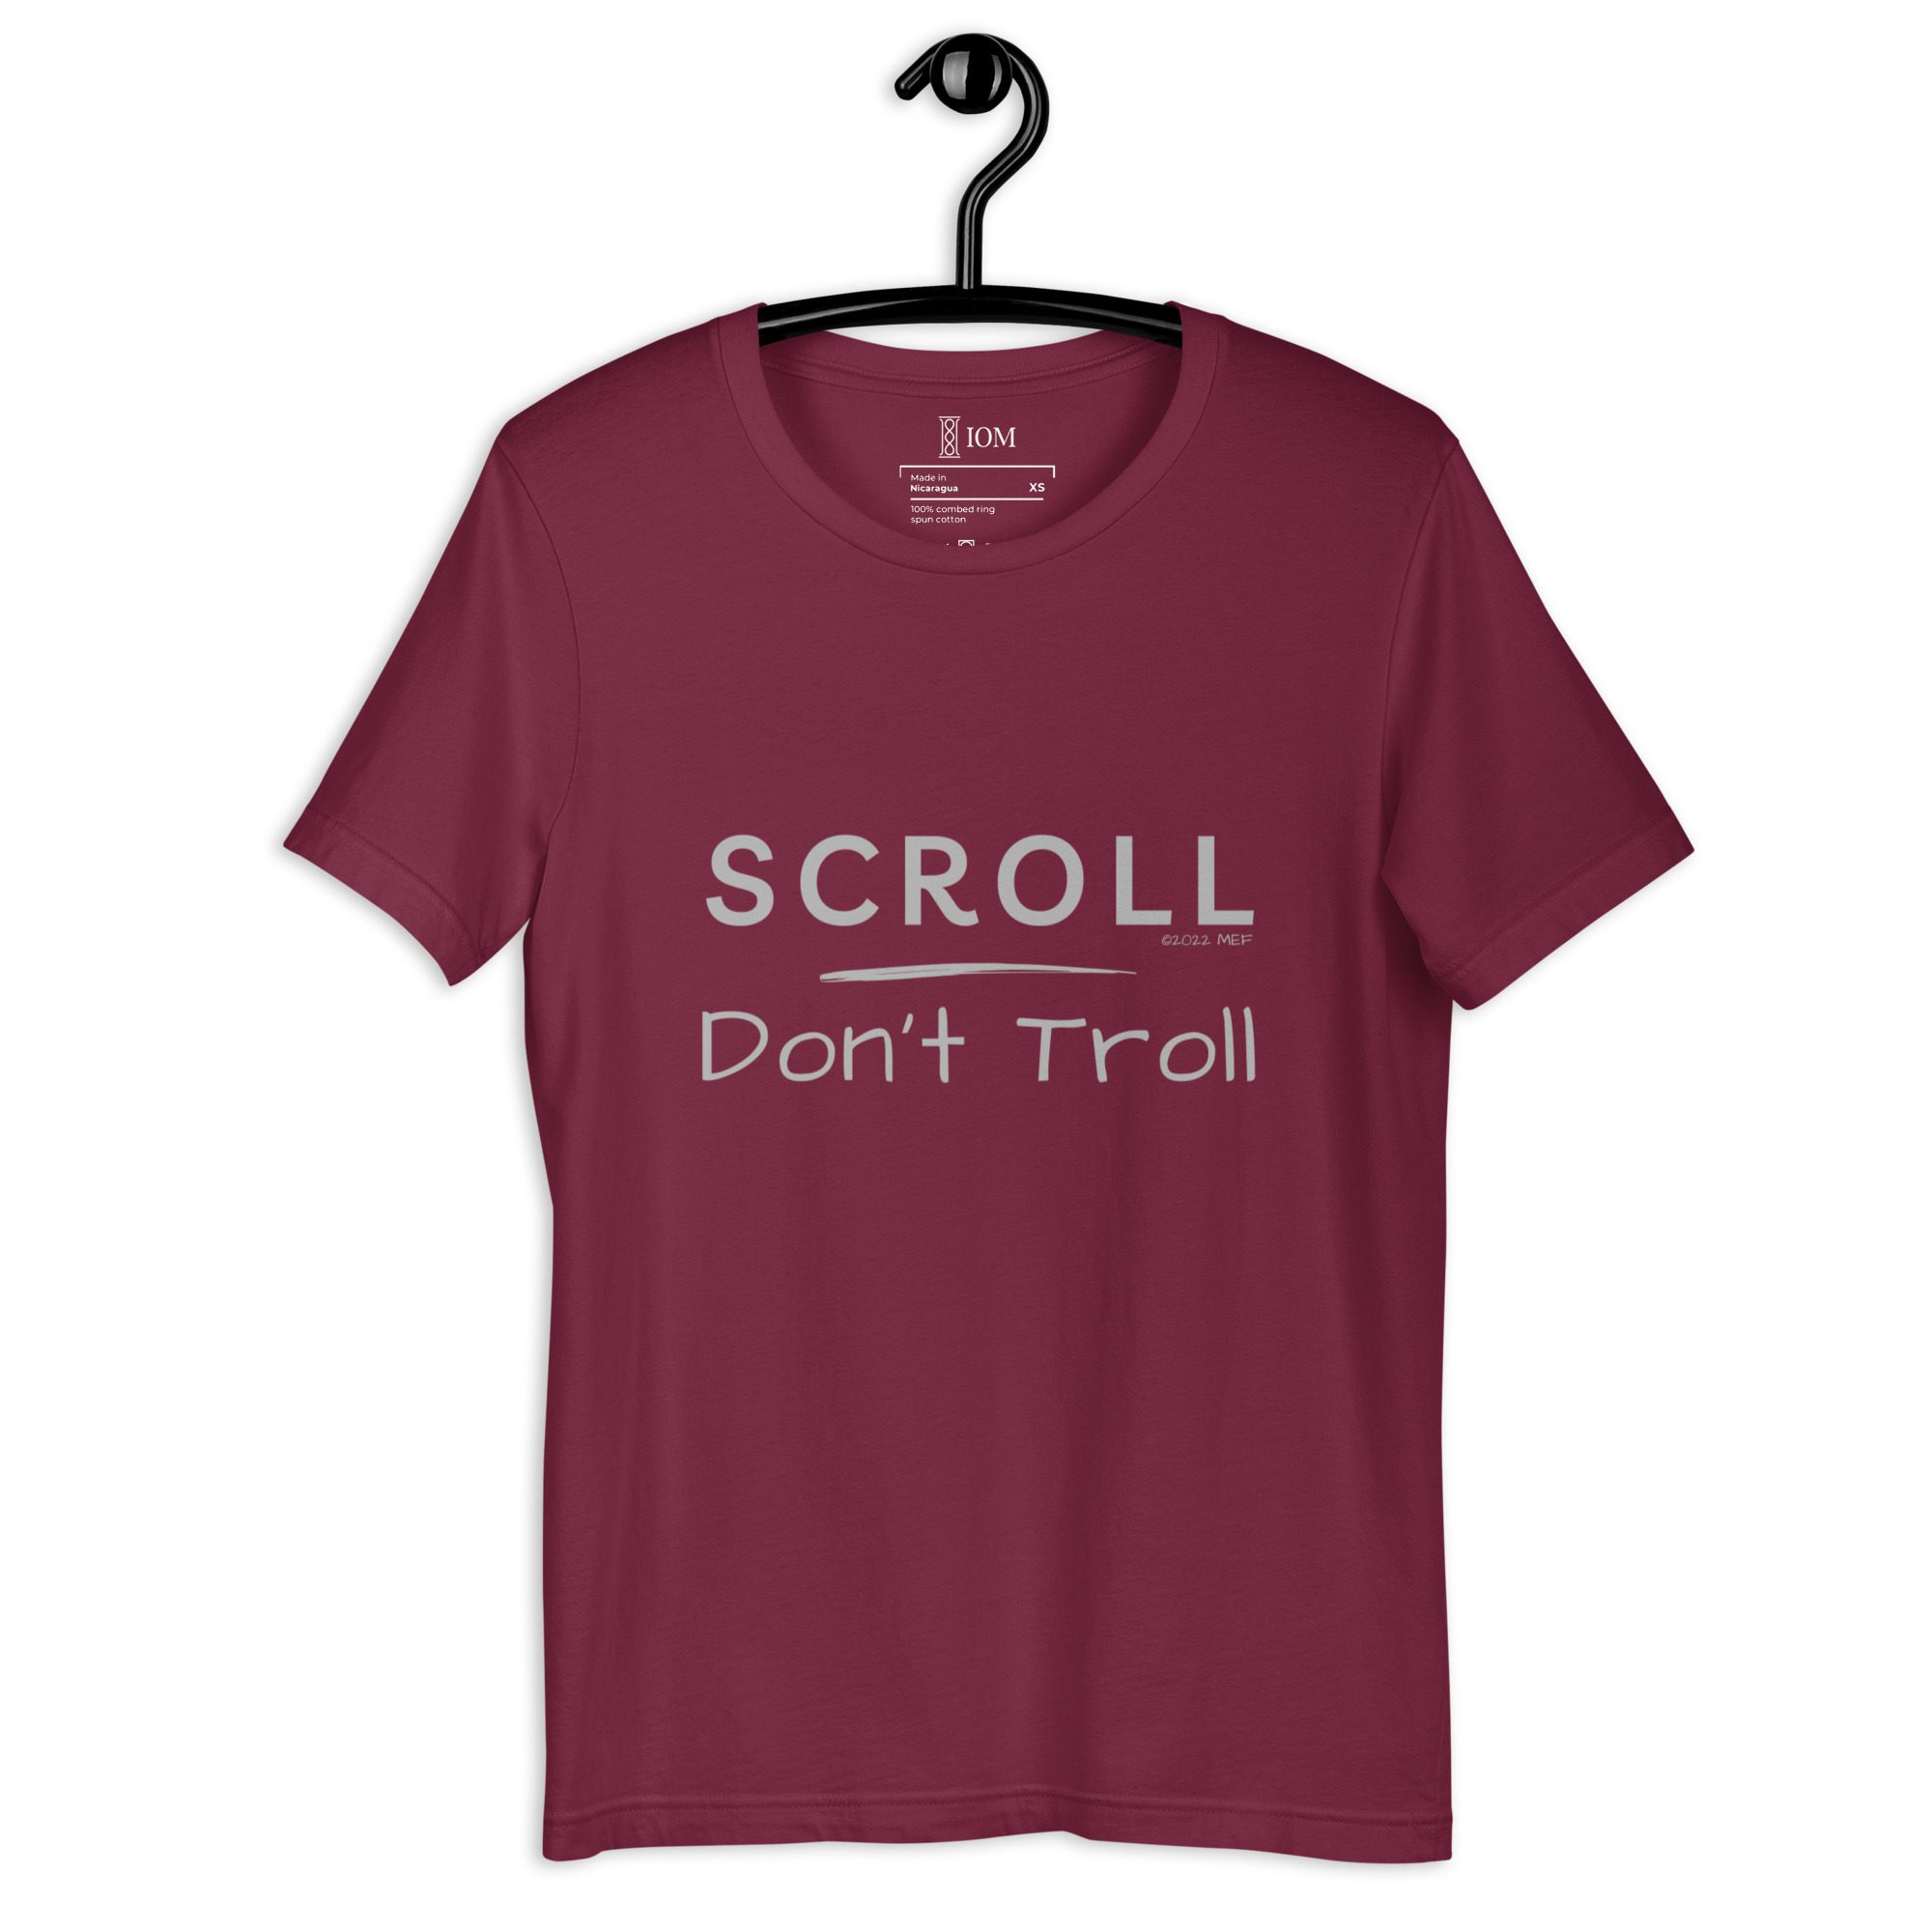 Scroll Don't Troll Tee